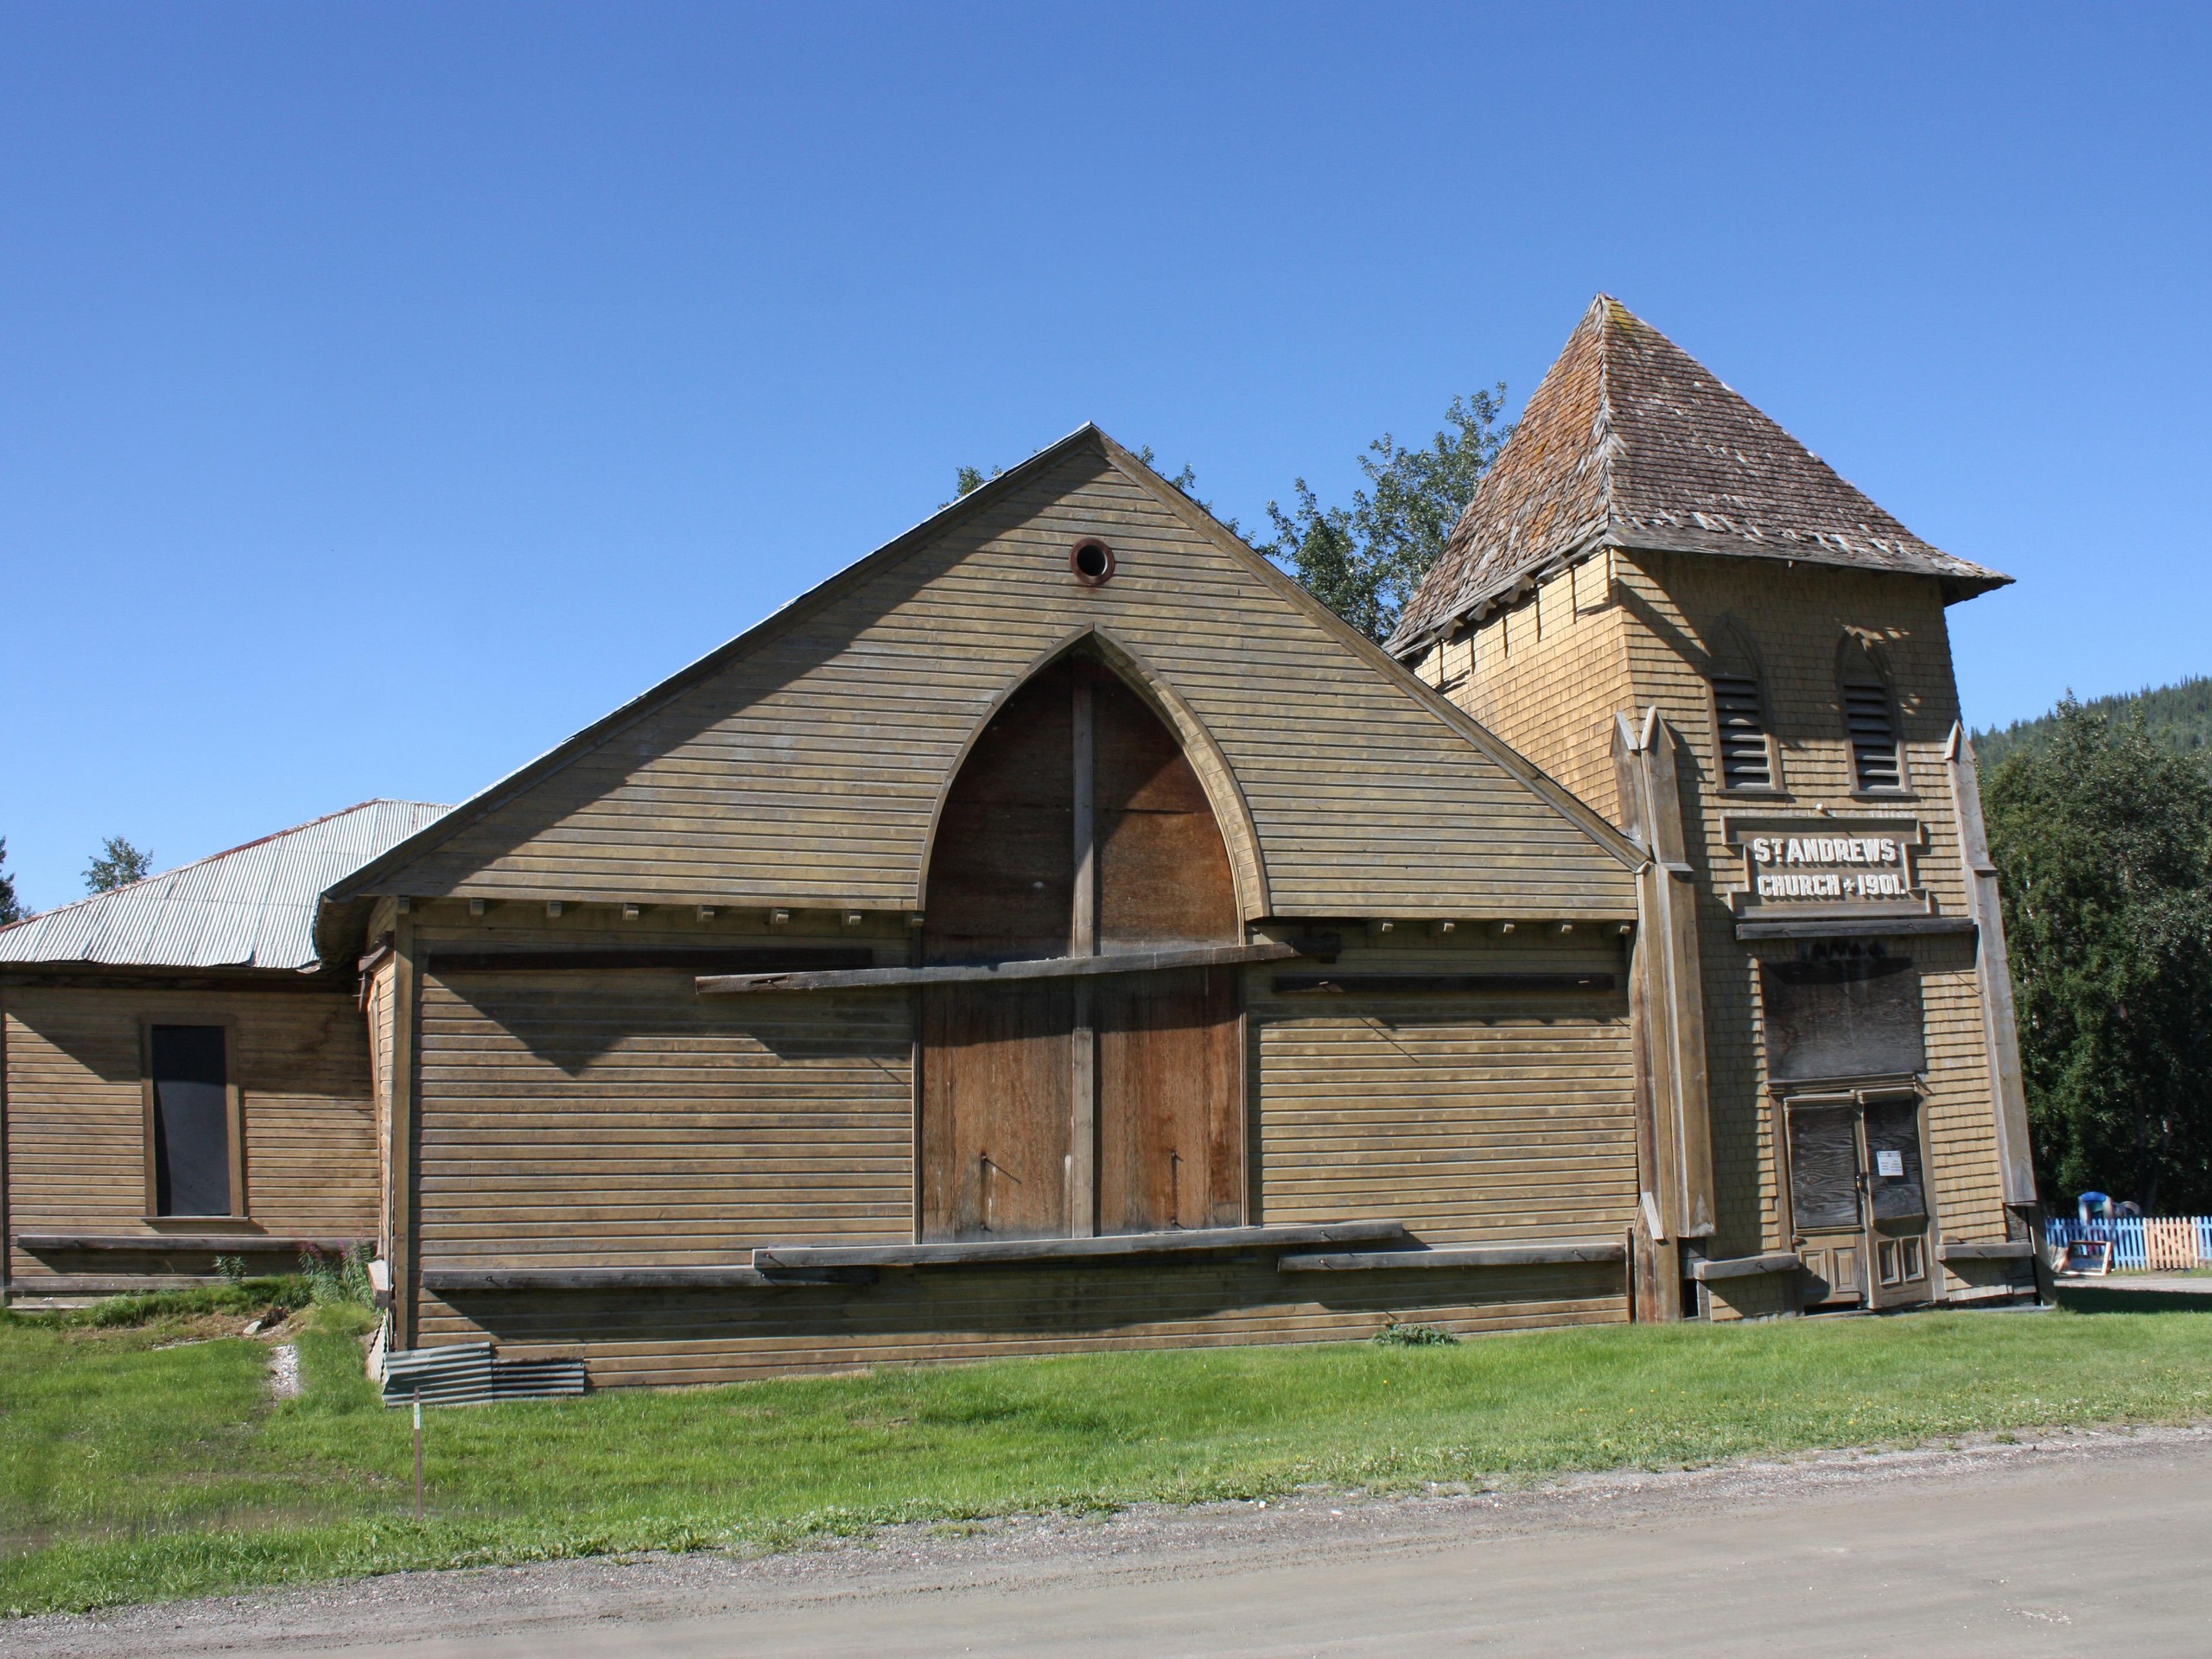 Old wooden building in Dawson City, Yukon